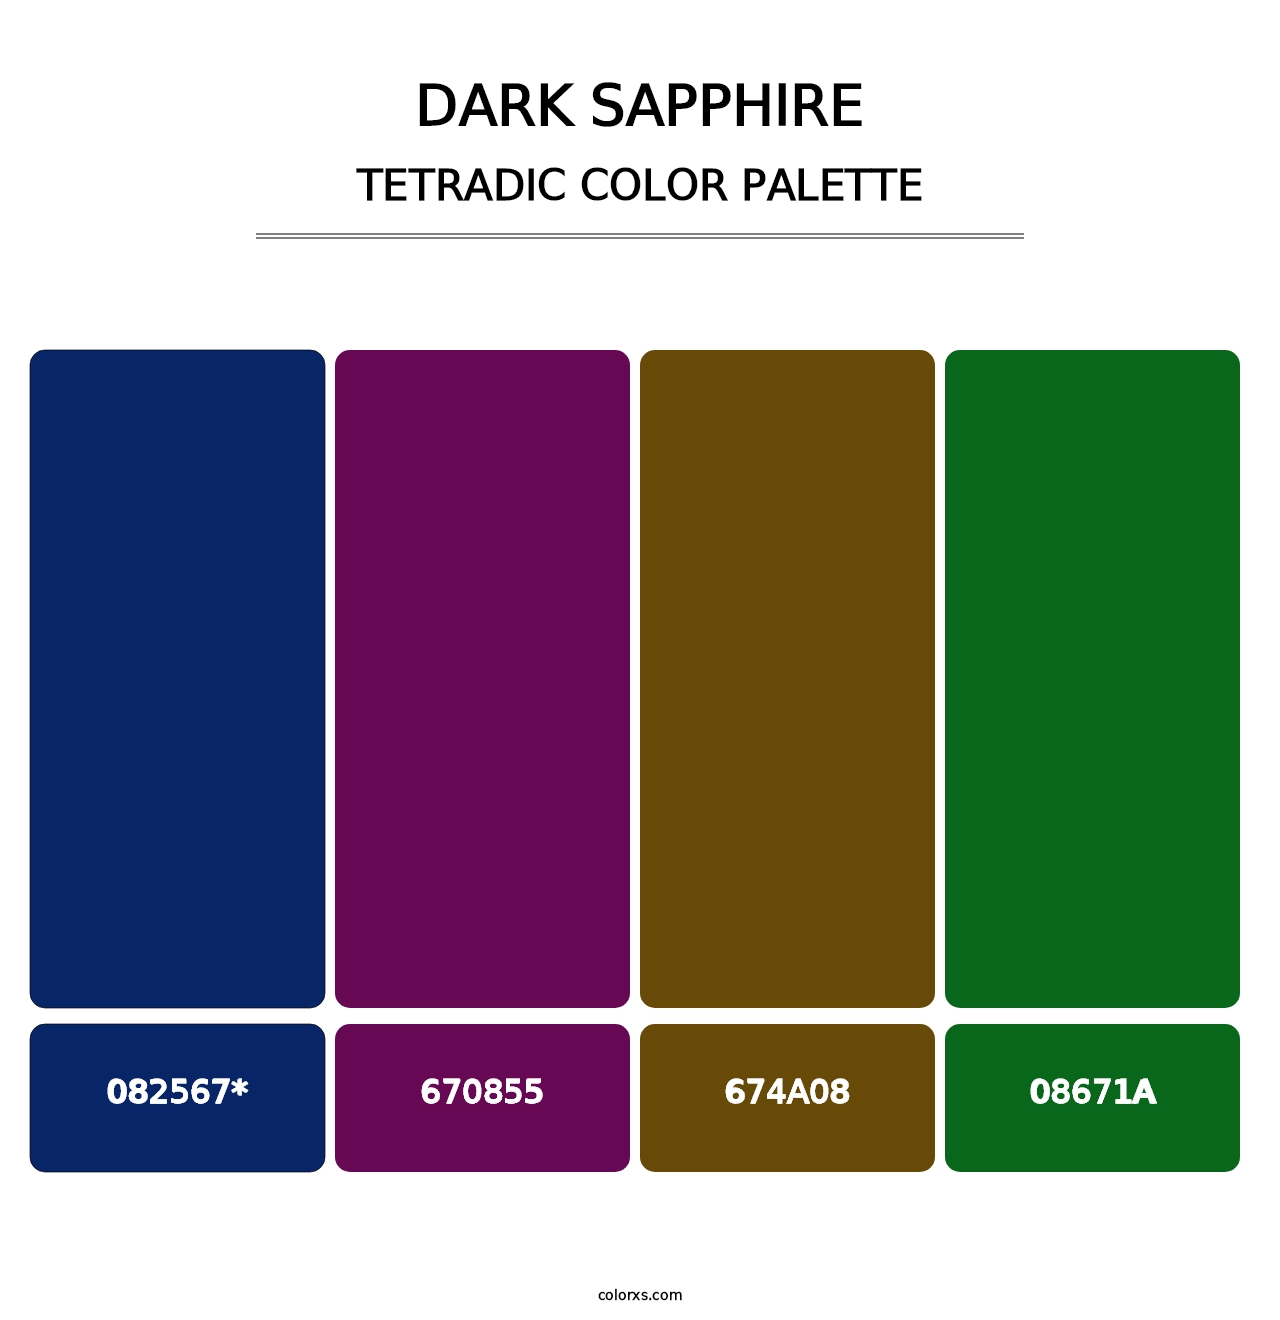 Dark Sapphire - Tetradic Color Palette